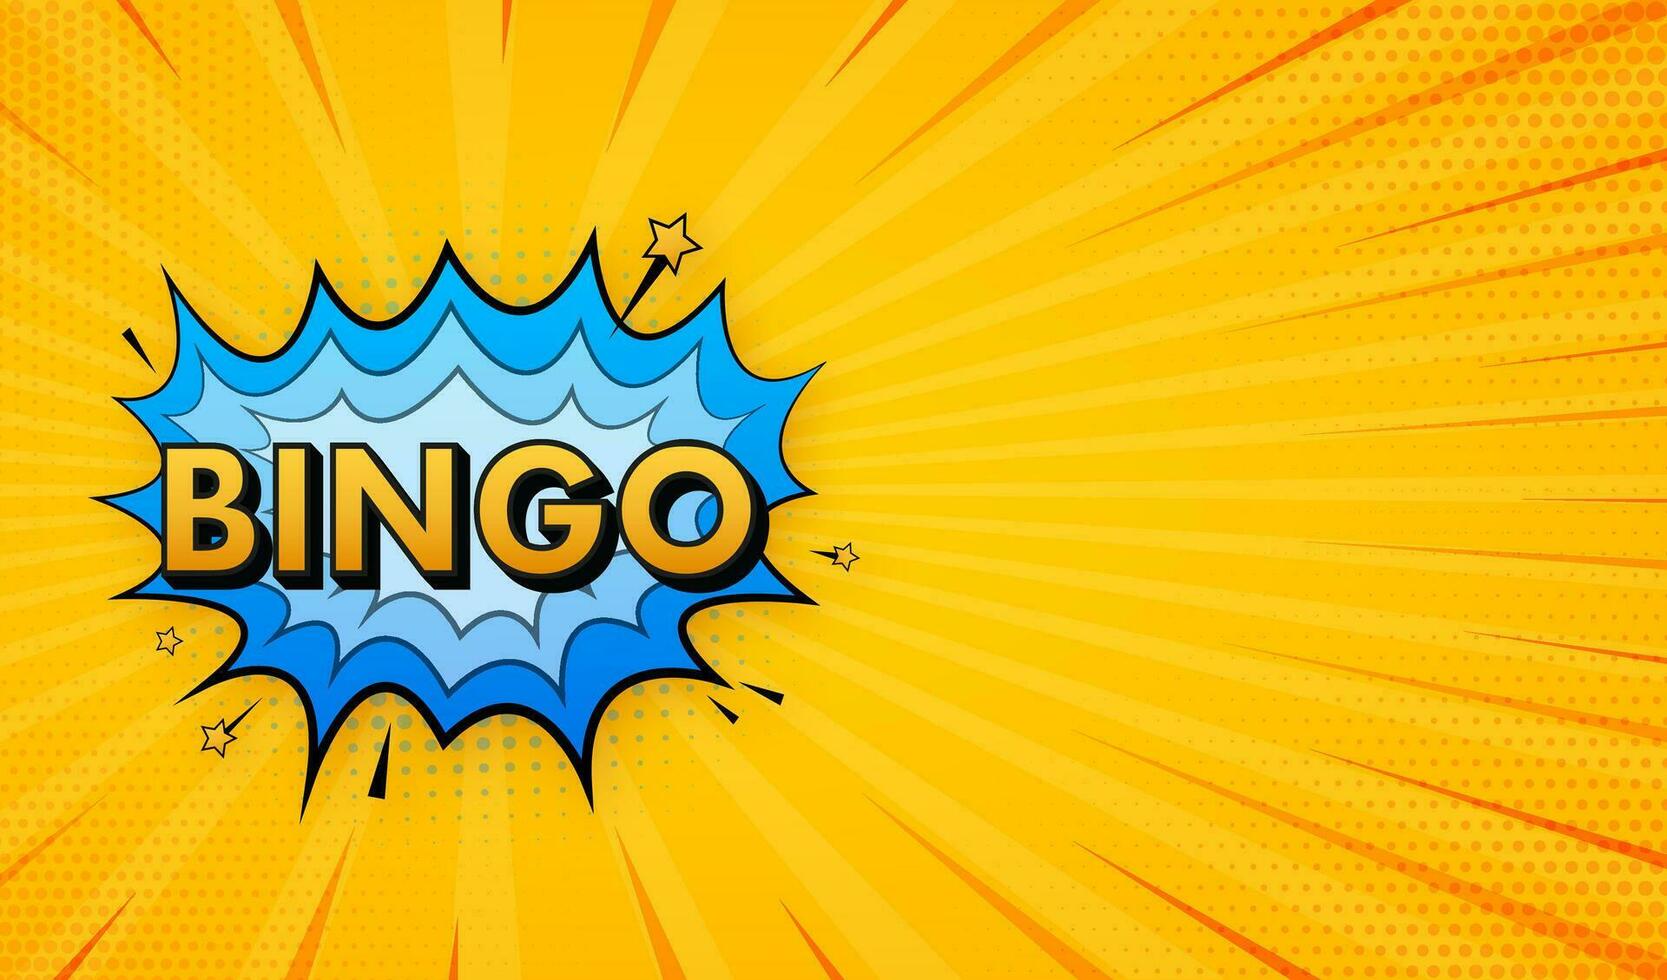 Bingo or Lottery game, card. Big Win. Vector stock illustration